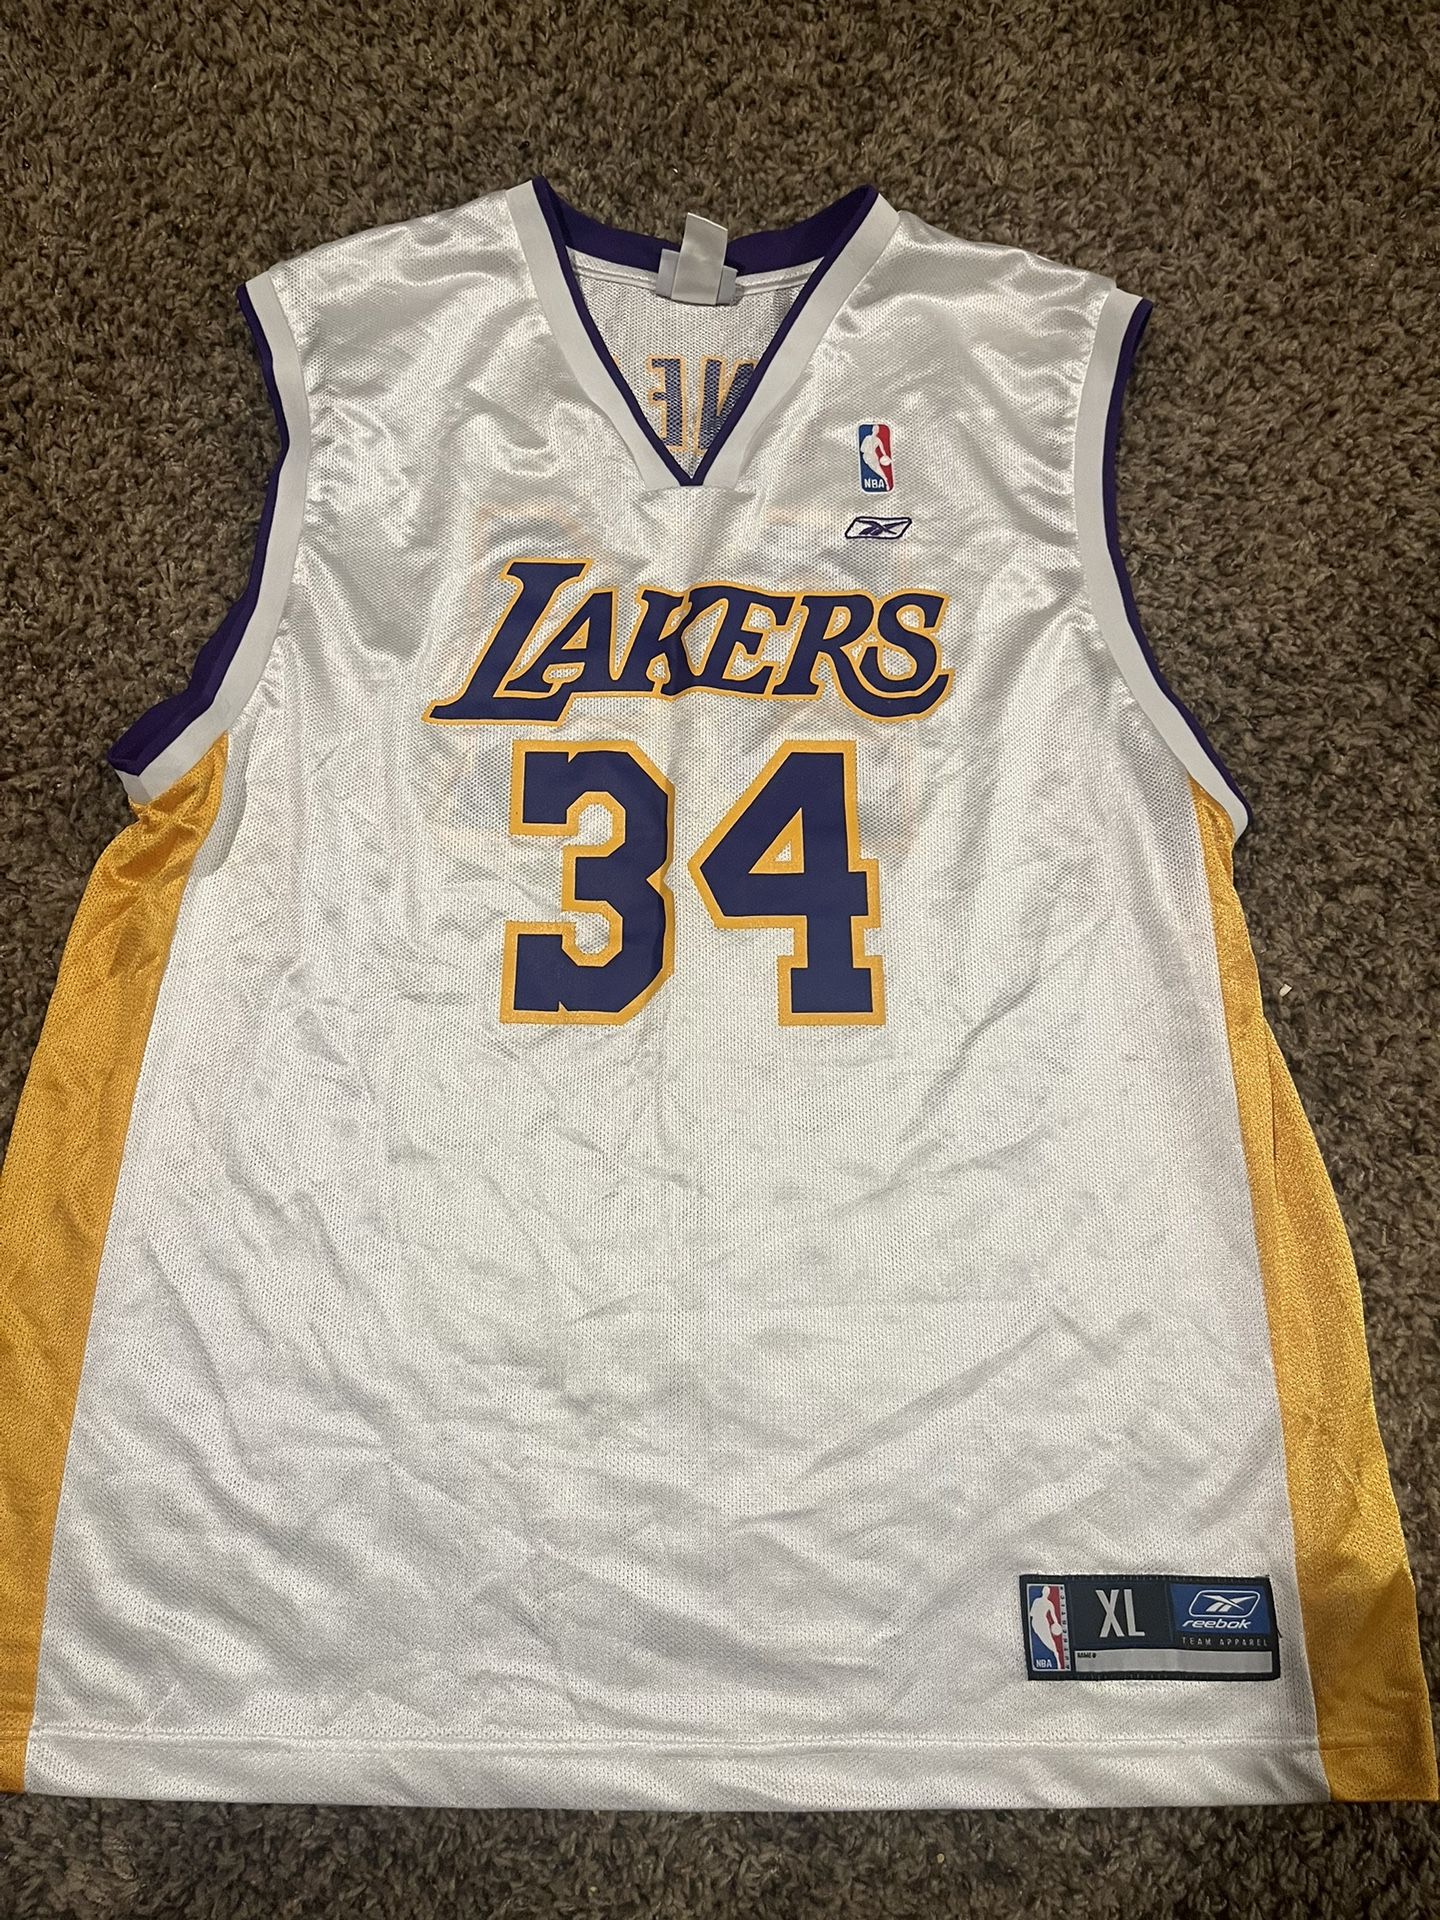 XL Shaq Lakers Jersey